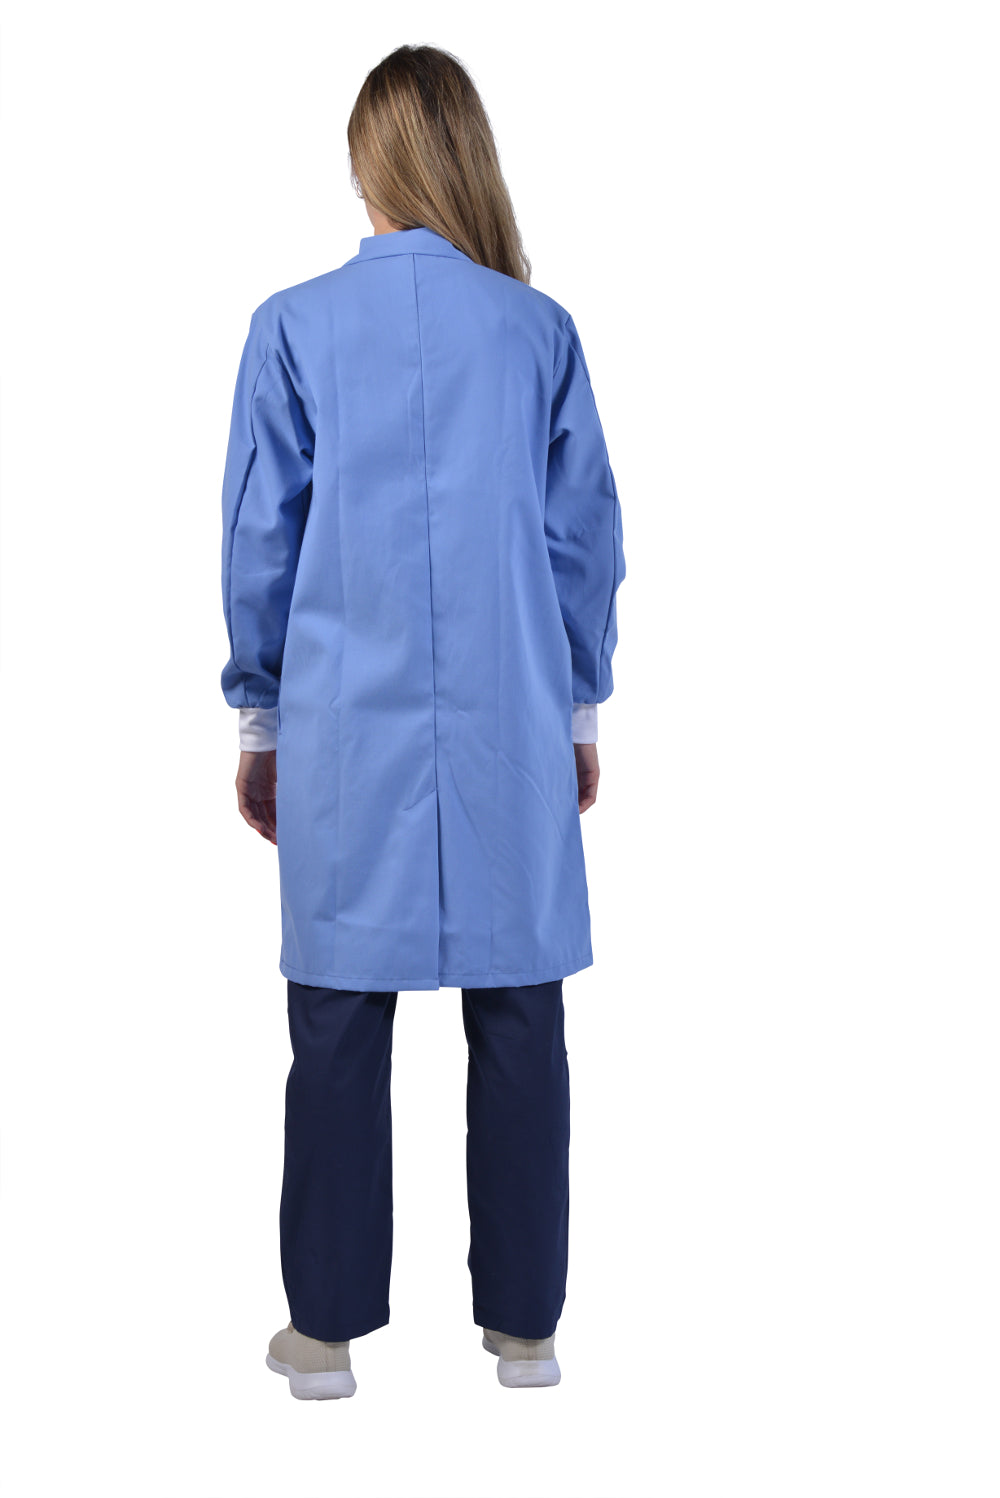 Ciel Blue - Avida Lab Coats 42" Unisex Lab Coat with Knit Cuffs (AAMI Level I Fabric)